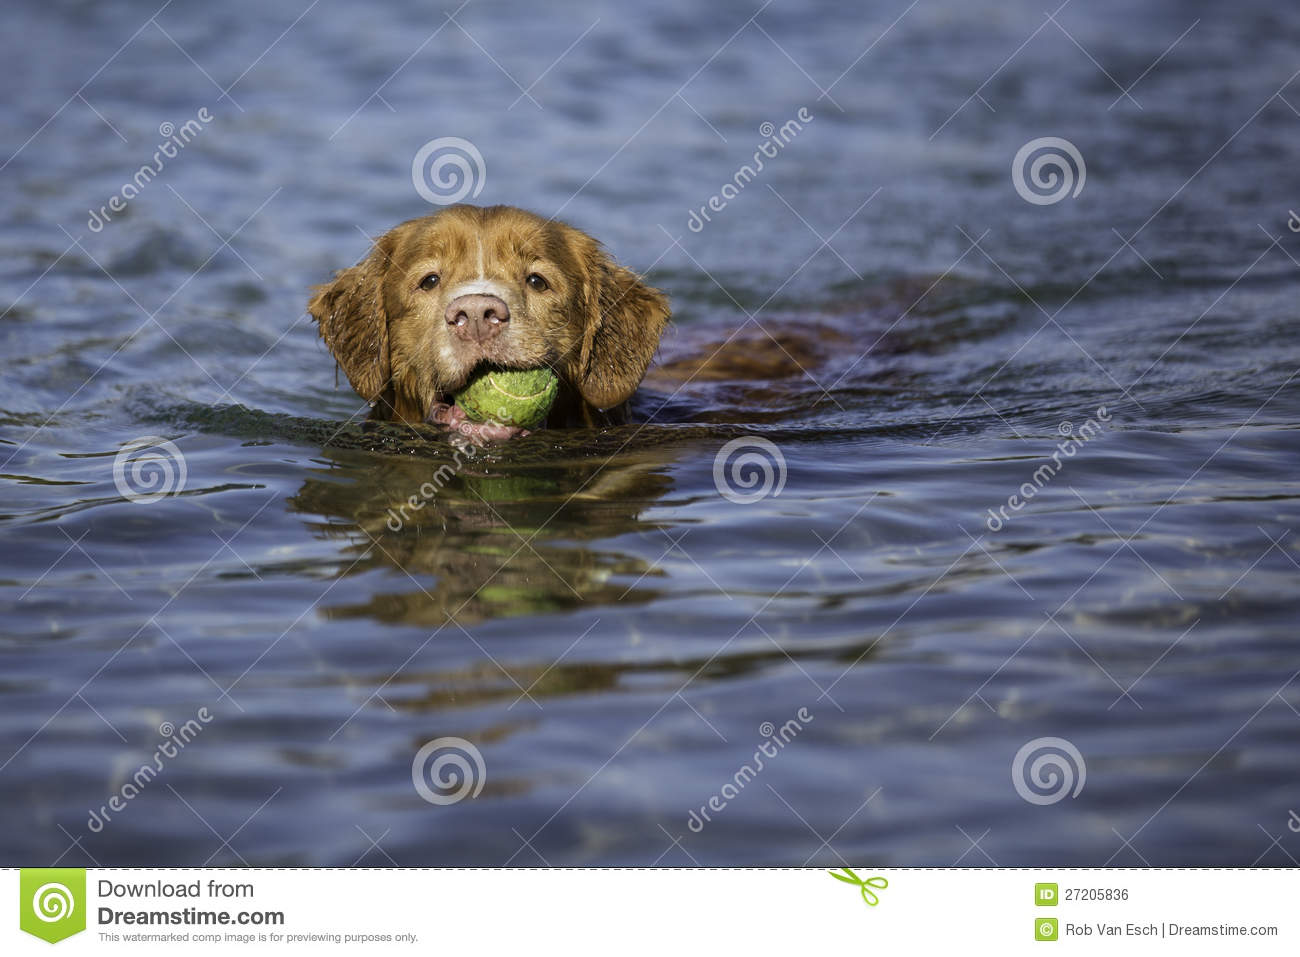 Swimming Dog Royalty Free Stock Image   Image  27205836